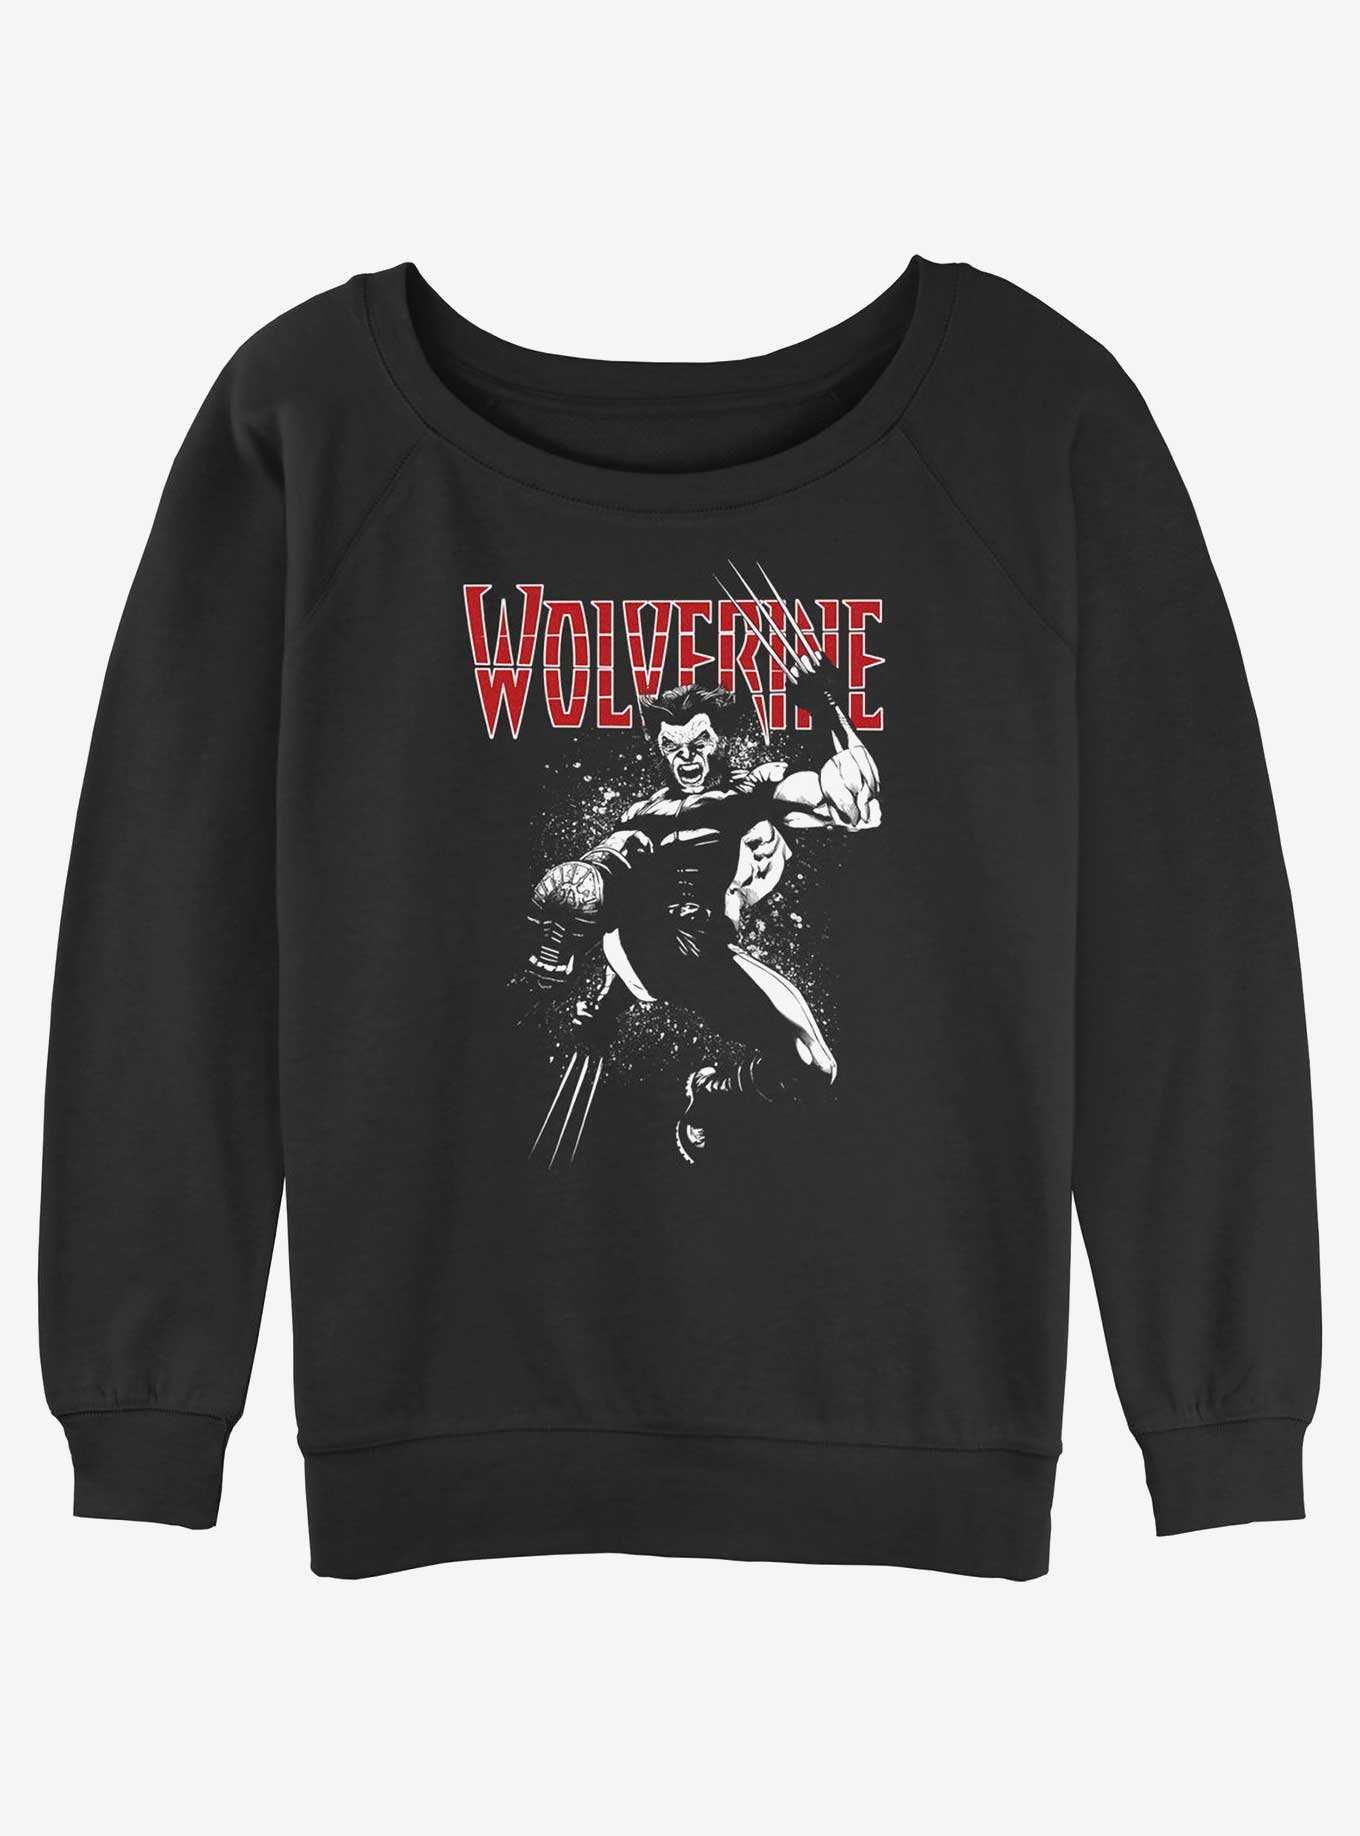 Wolverine Jump Tour Girls Slouchy Sweatshirt, , hi-res